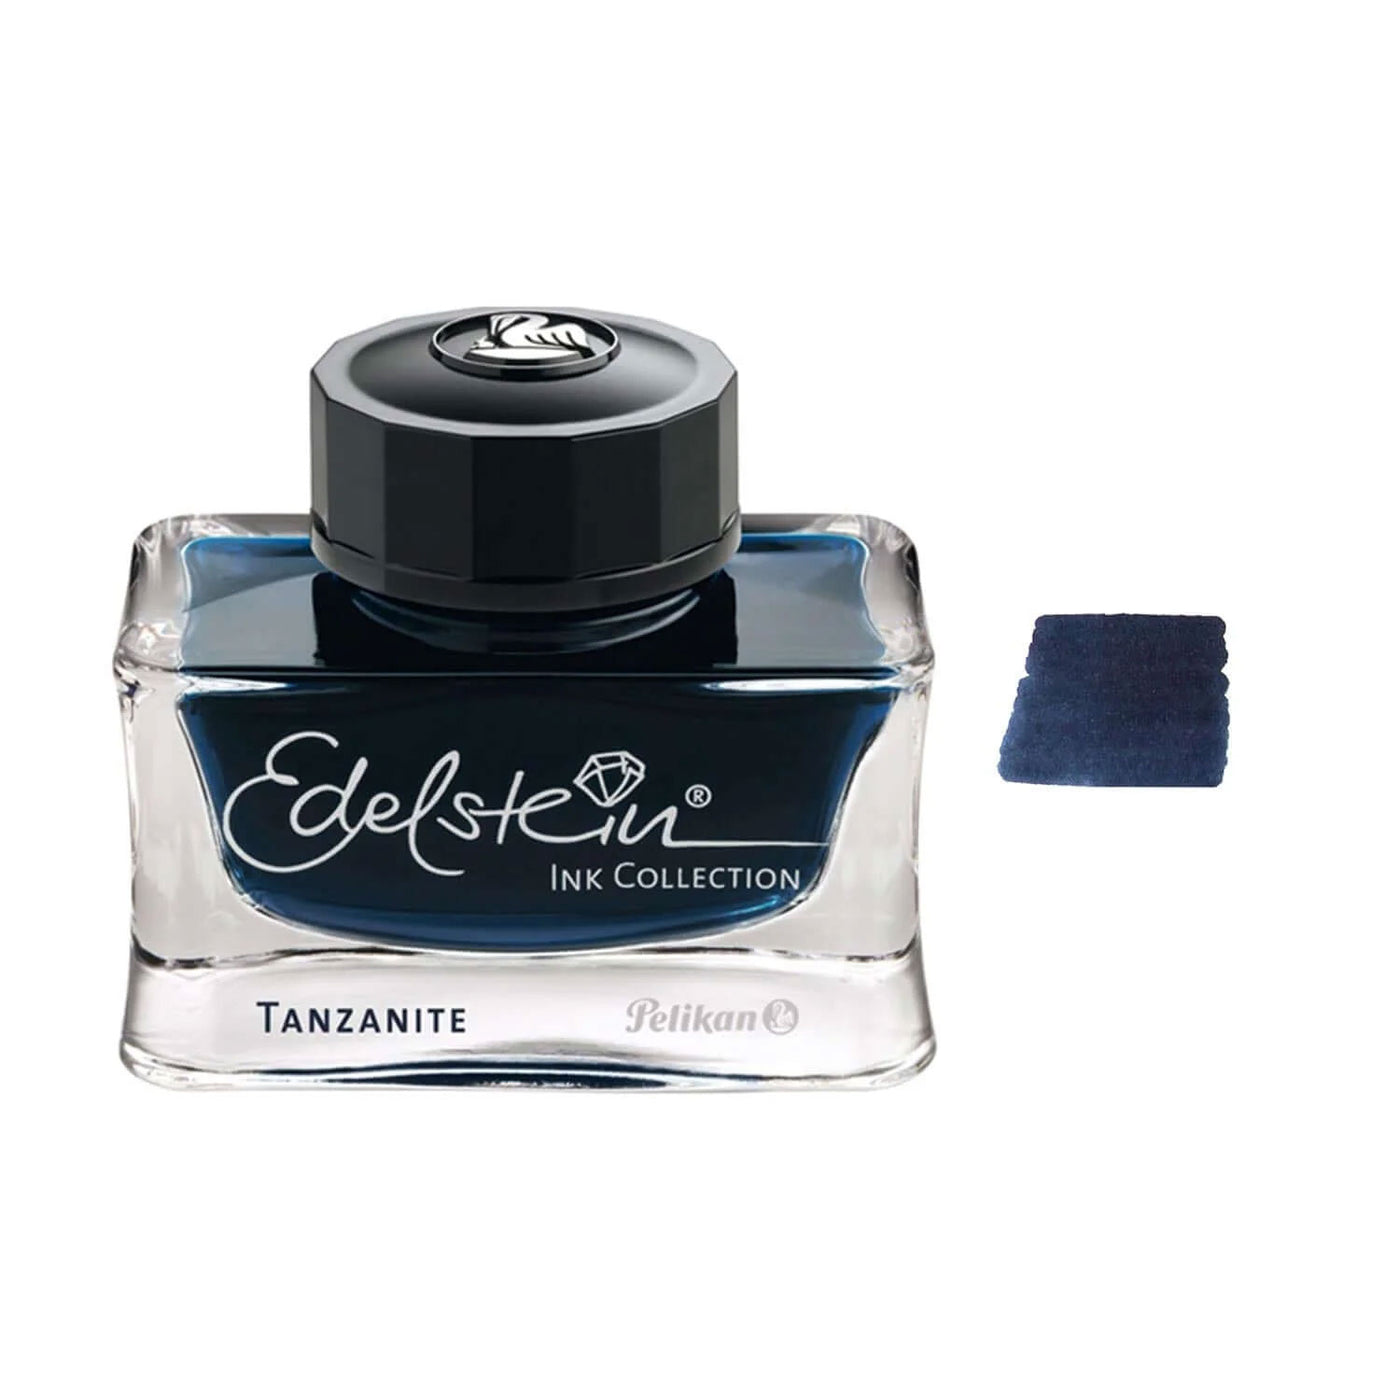 Pelikan Edelstein Ink Bottle, Tanzanite (Blue-Black) - 50ml